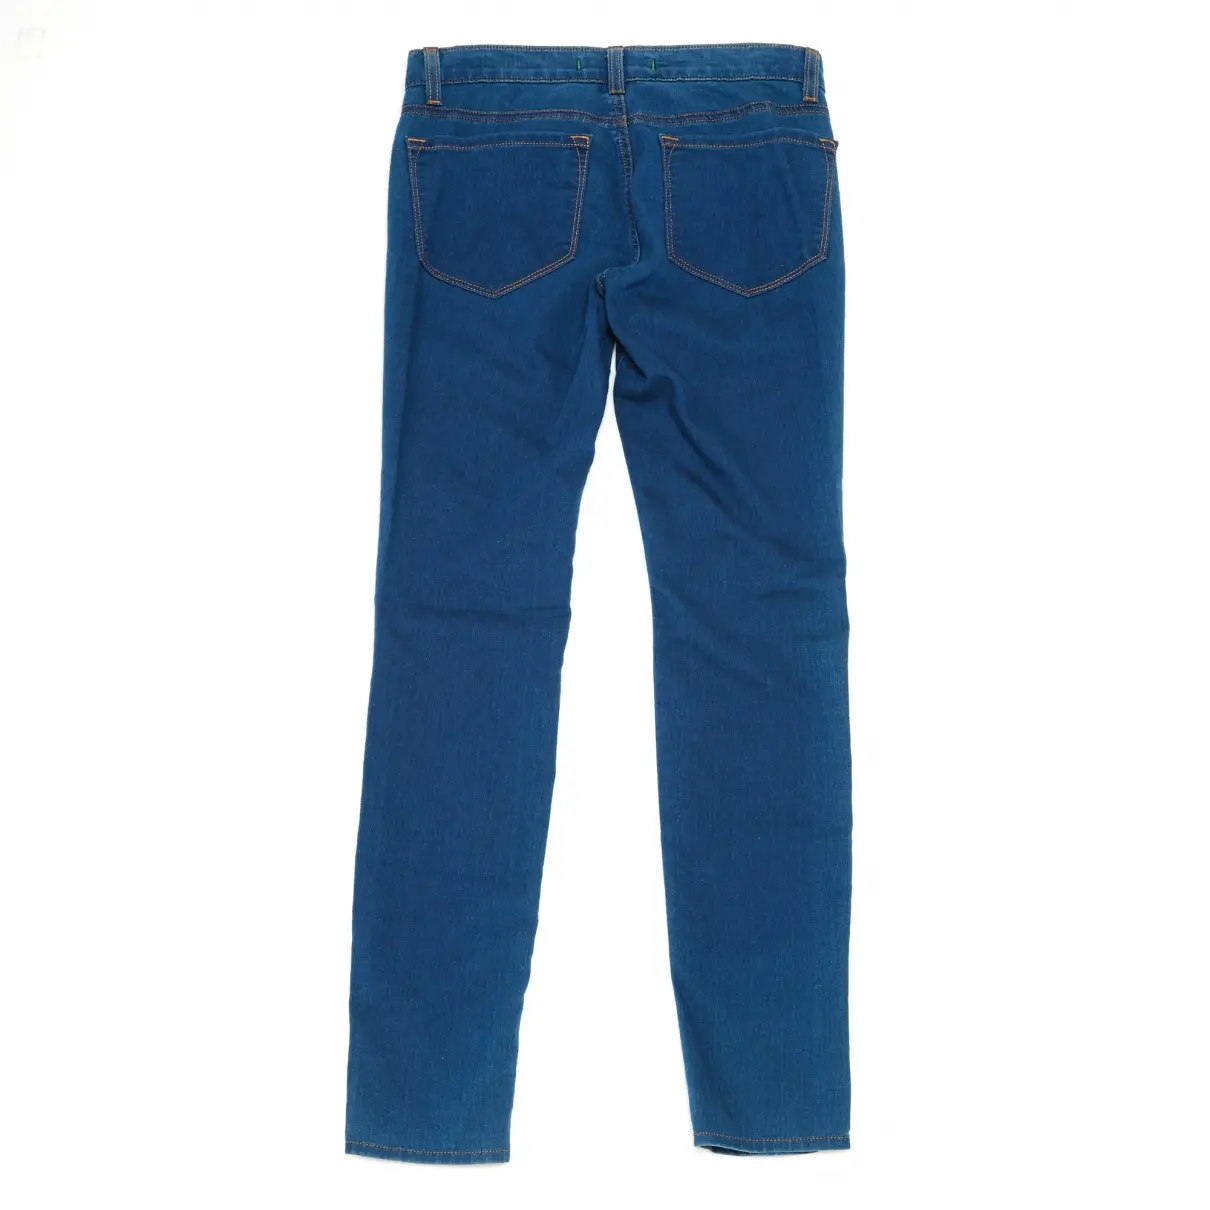 Buy J Brand Slim jeans online